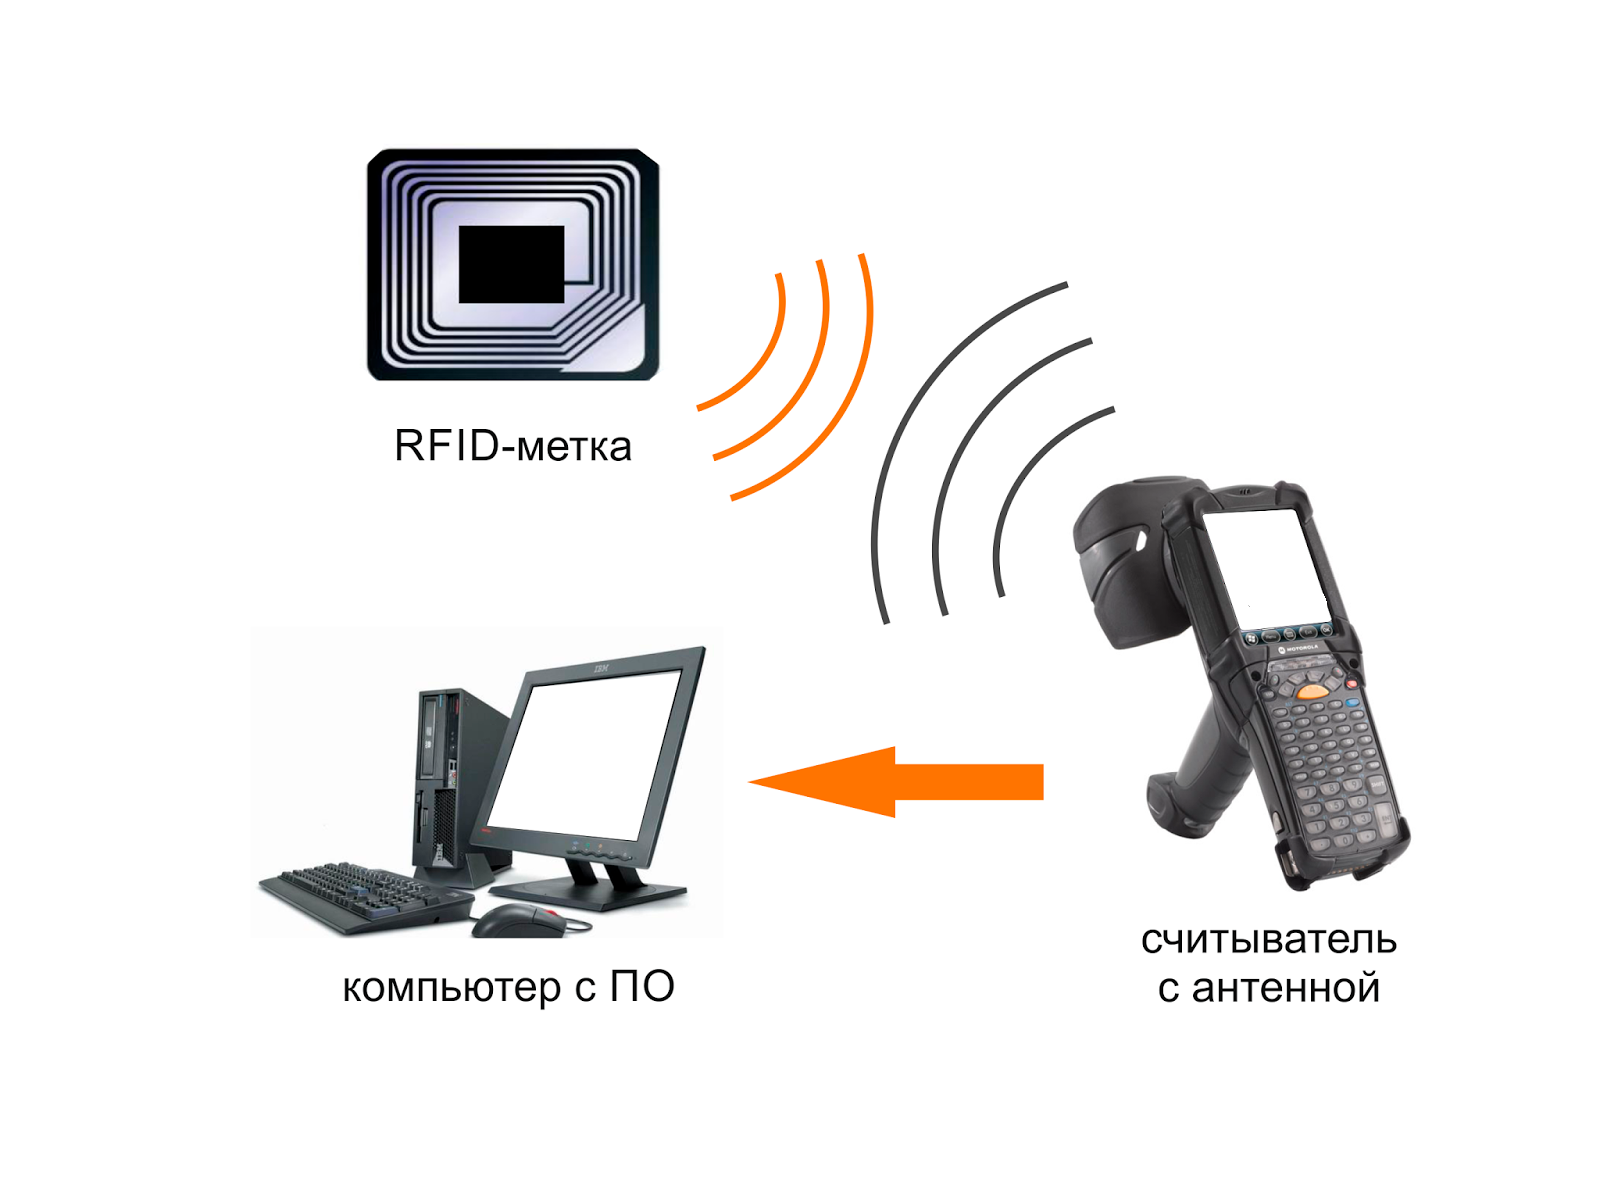 Технология радиочастотной идентификации RFID. Система считывания RFID меток. (RFIDТЕХНОЛОГИИ, Radio Frequency ldentification. Радиочастотные метки RFID. Технологическая метка интернет